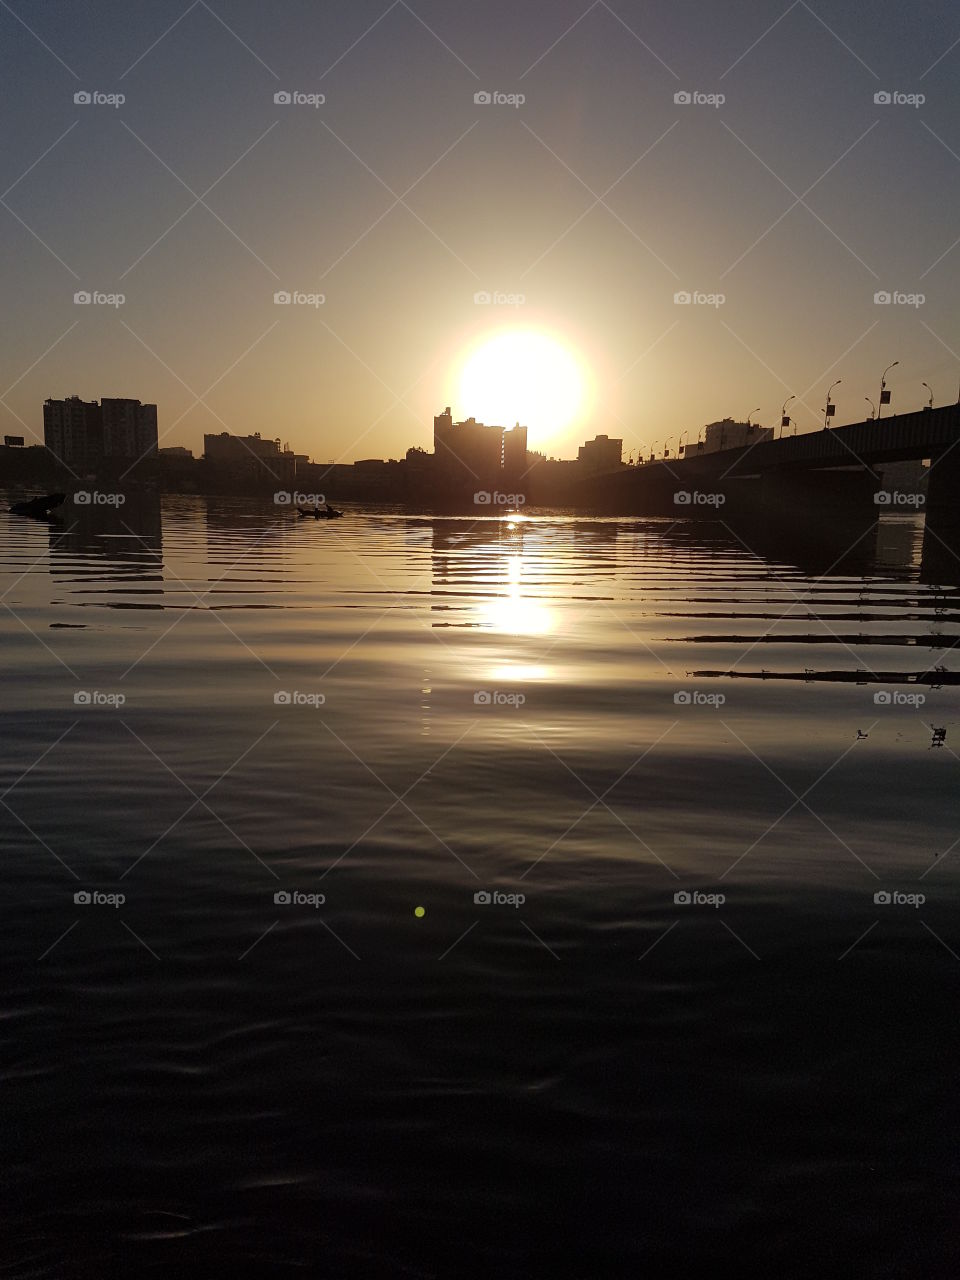 Sunset - River  - Bridge - Water - Building - Landscape - Reflection - Egypt